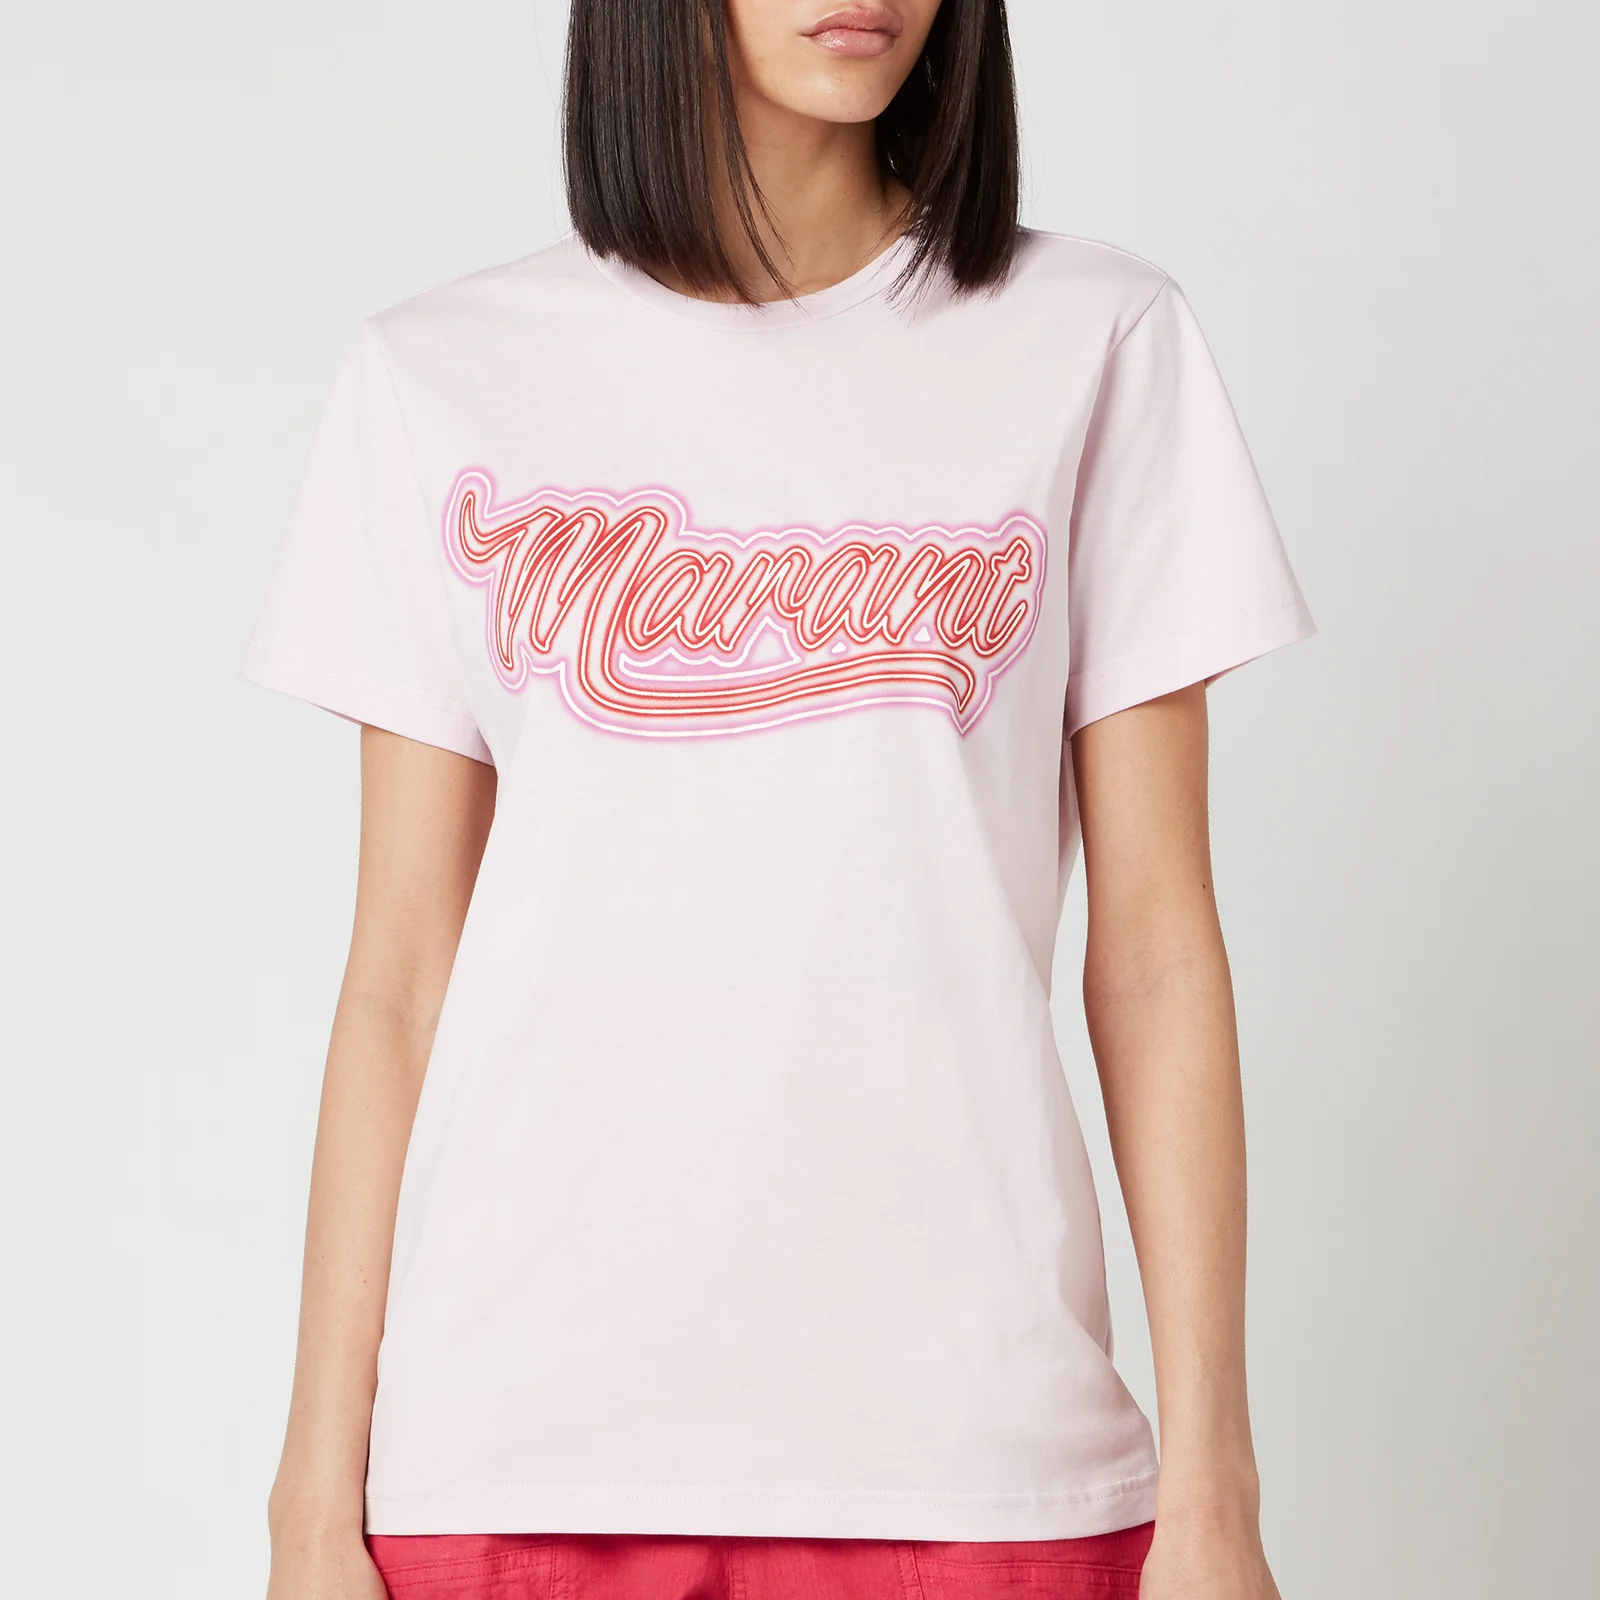 Marant Etoile Women's Zaof T-Shirt - Pink Image 1